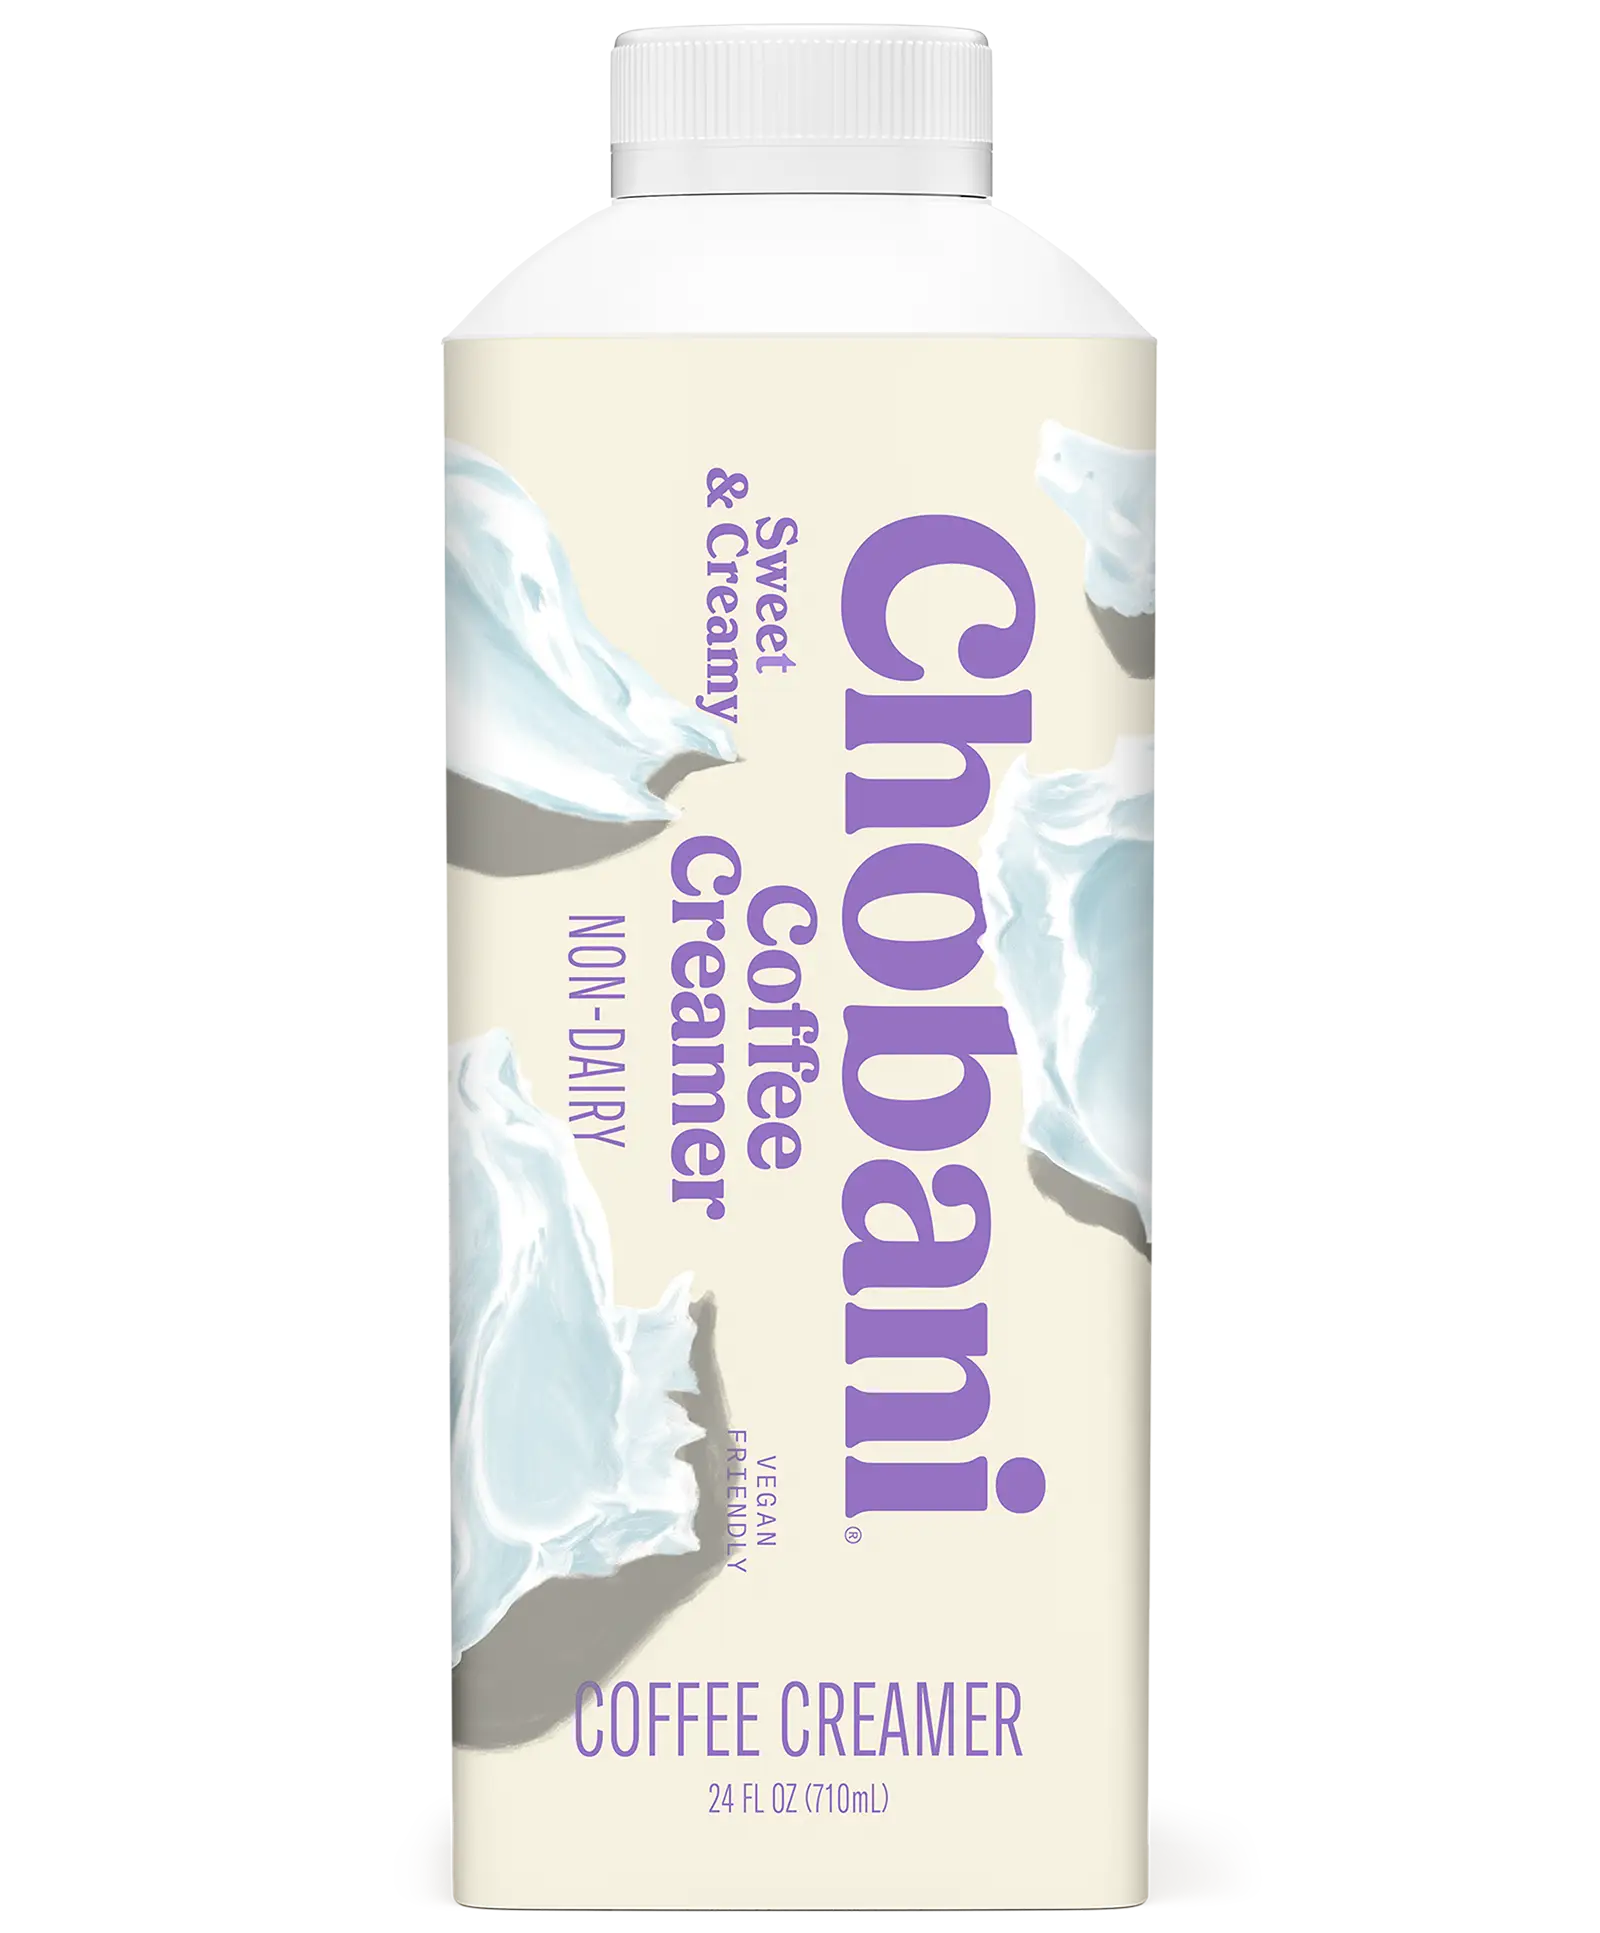 5 Amazing Dairy-Free Creamers  Dairy free creamer, Vegan coffee creamer,  Dairy free